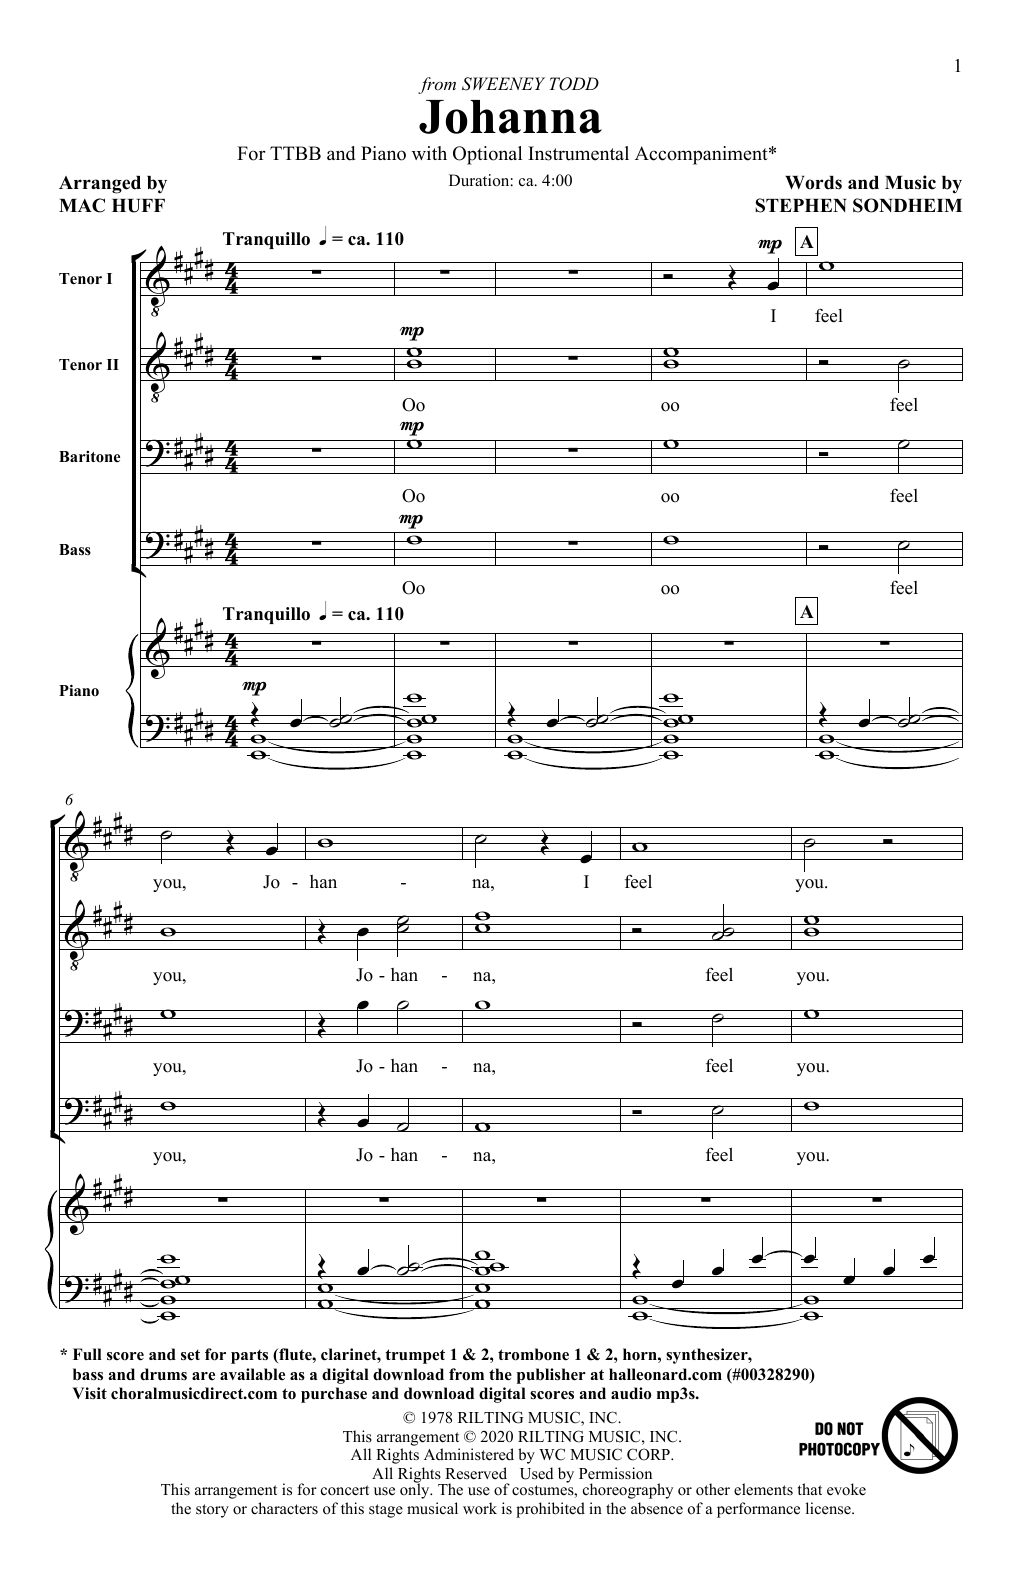 Stephen Sondheim Johanna (from Sweeney Todd) (arr. Mac Huff) Sheet Music Notes & Chords for TTBB Choir - Download or Print PDF